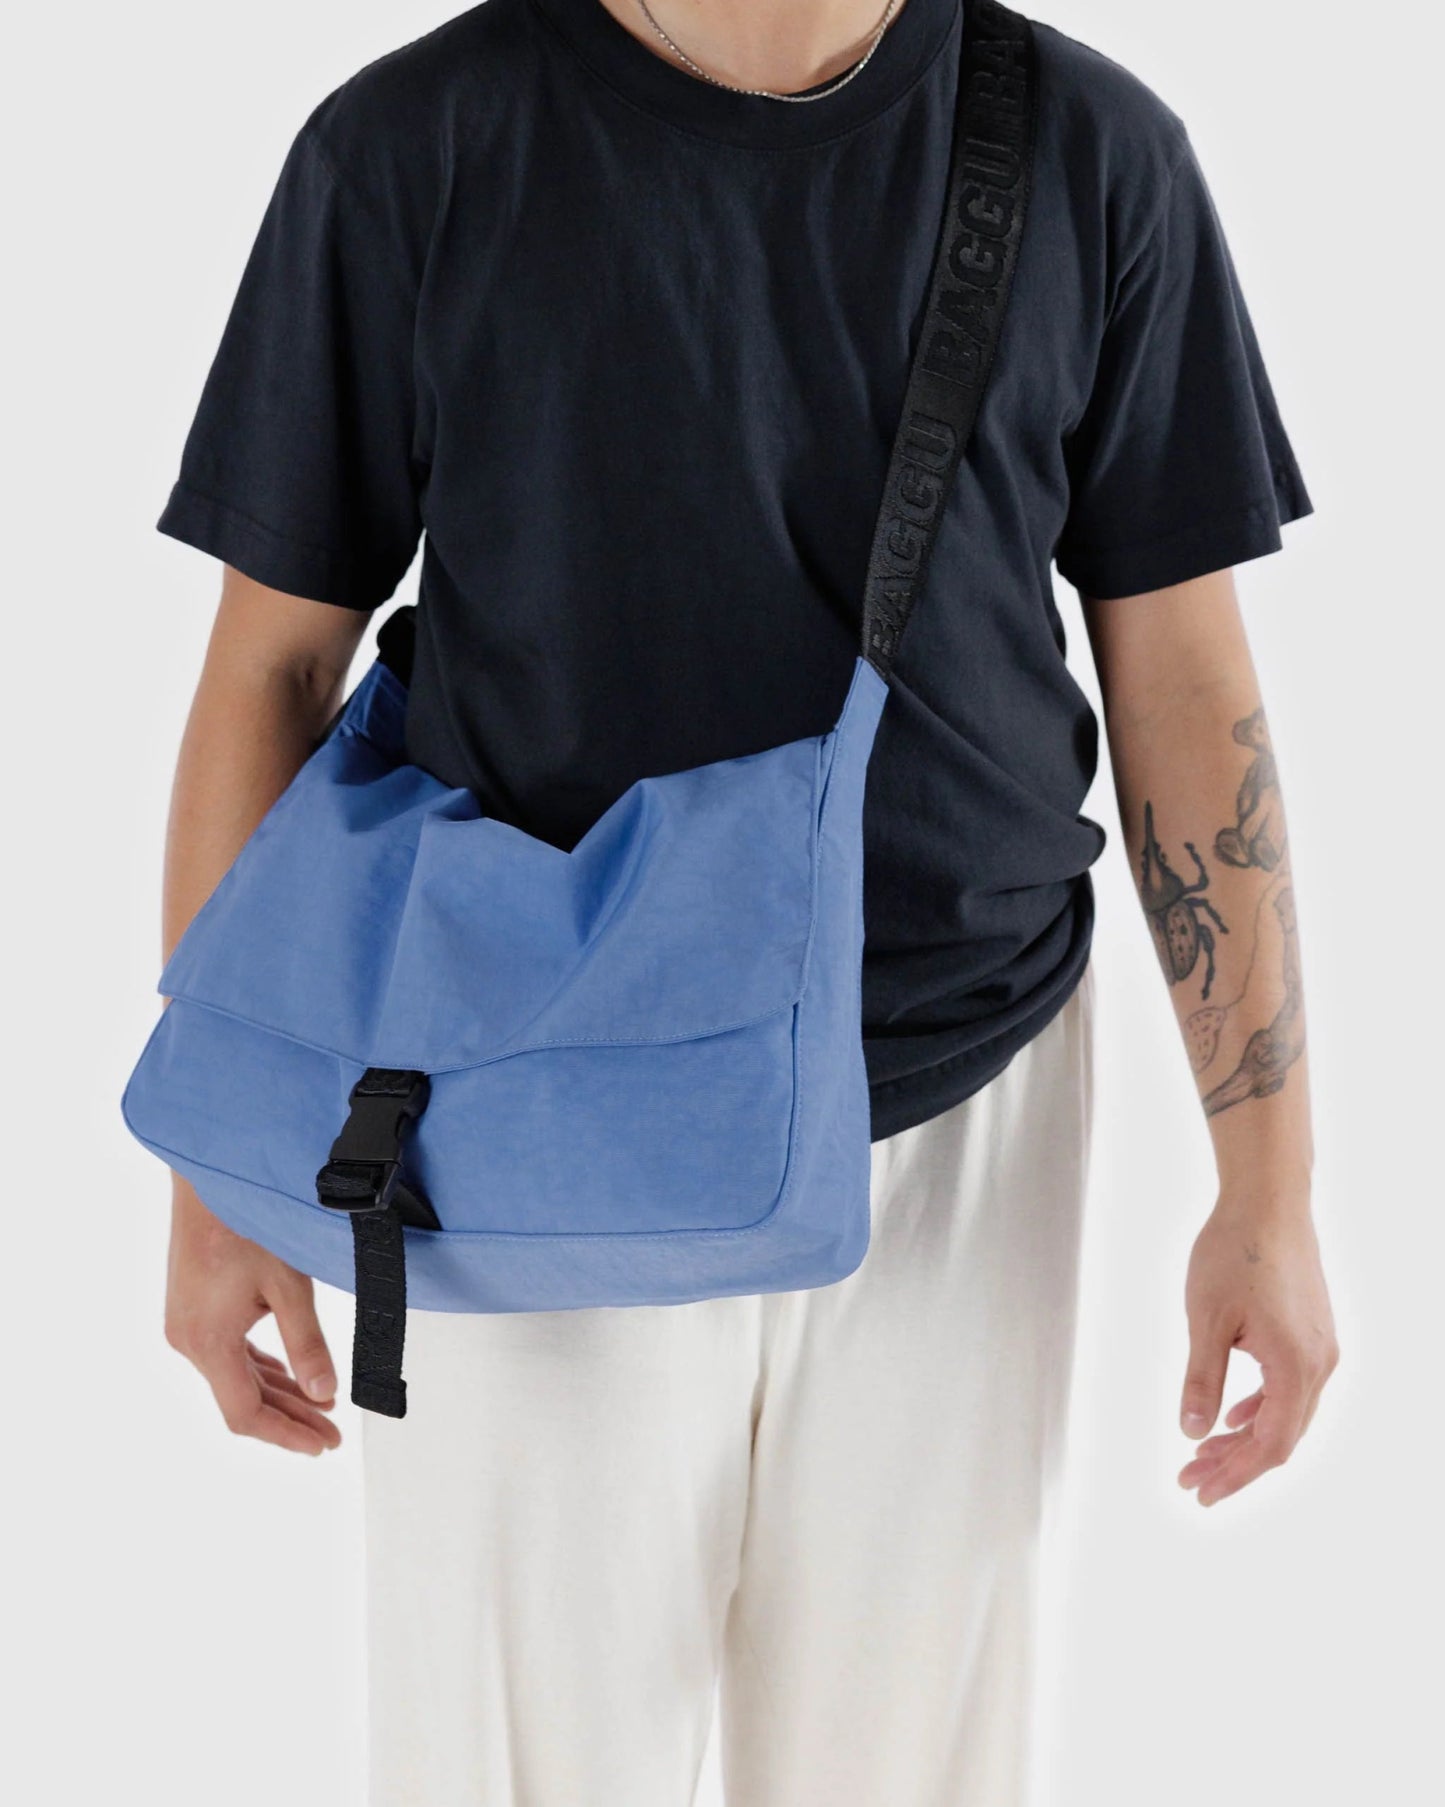 BAGGU Nylon Messenger Bag - Pansy Blue - Preston Apothecary